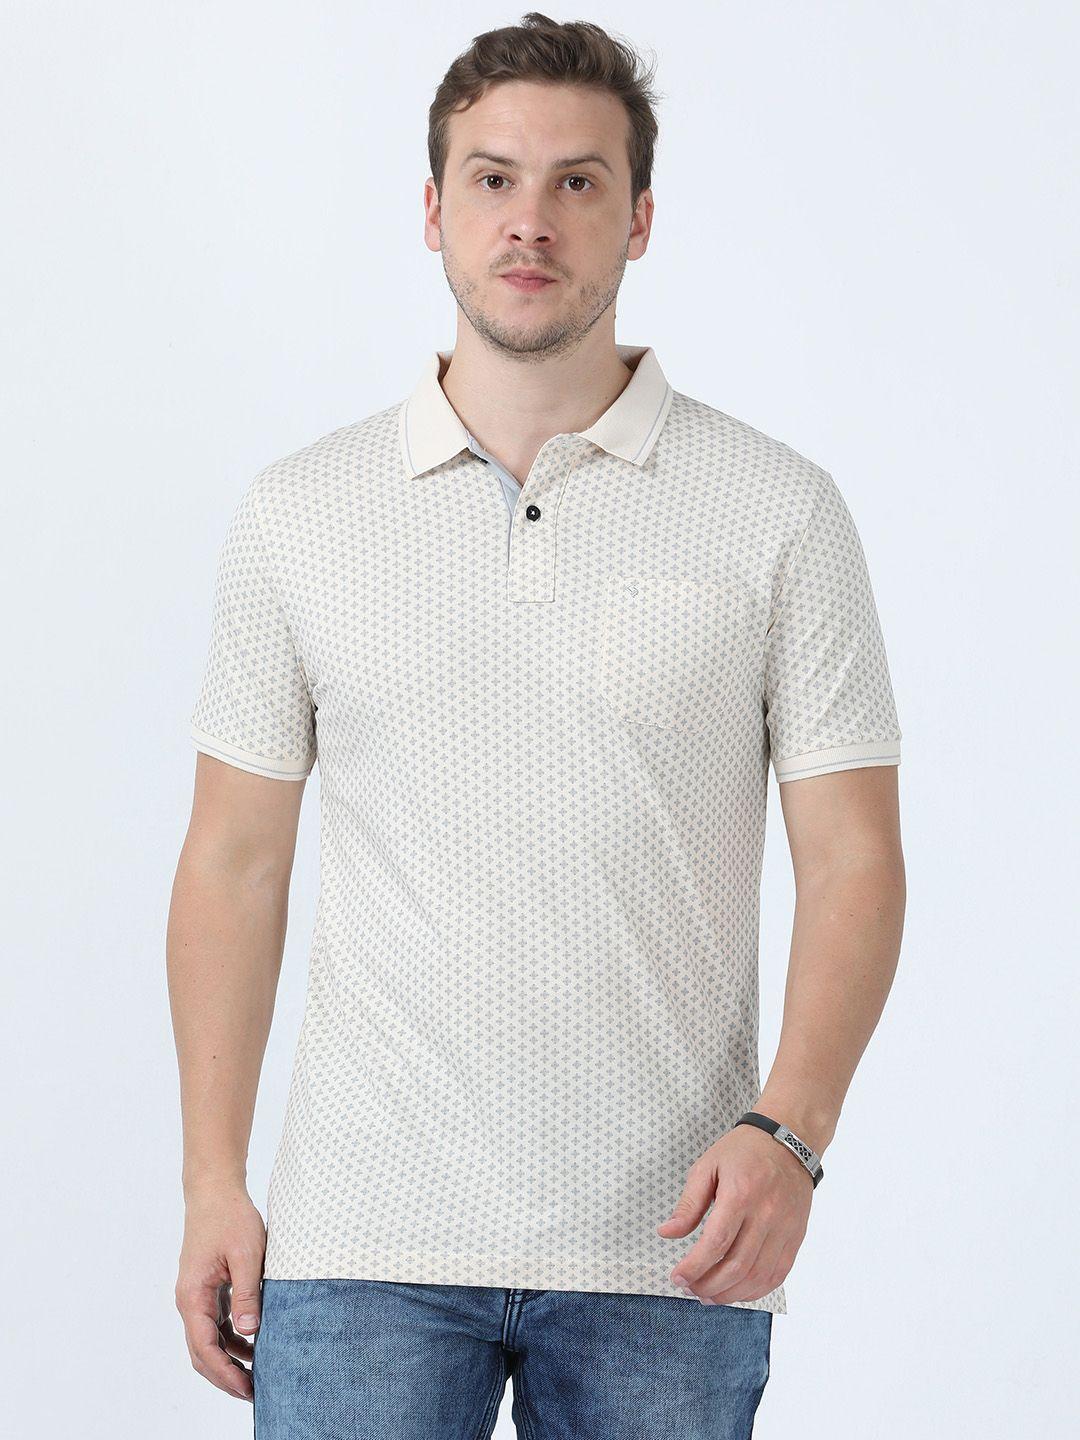 classic polo men polka dot polo collar pockets slim fit t-shirt